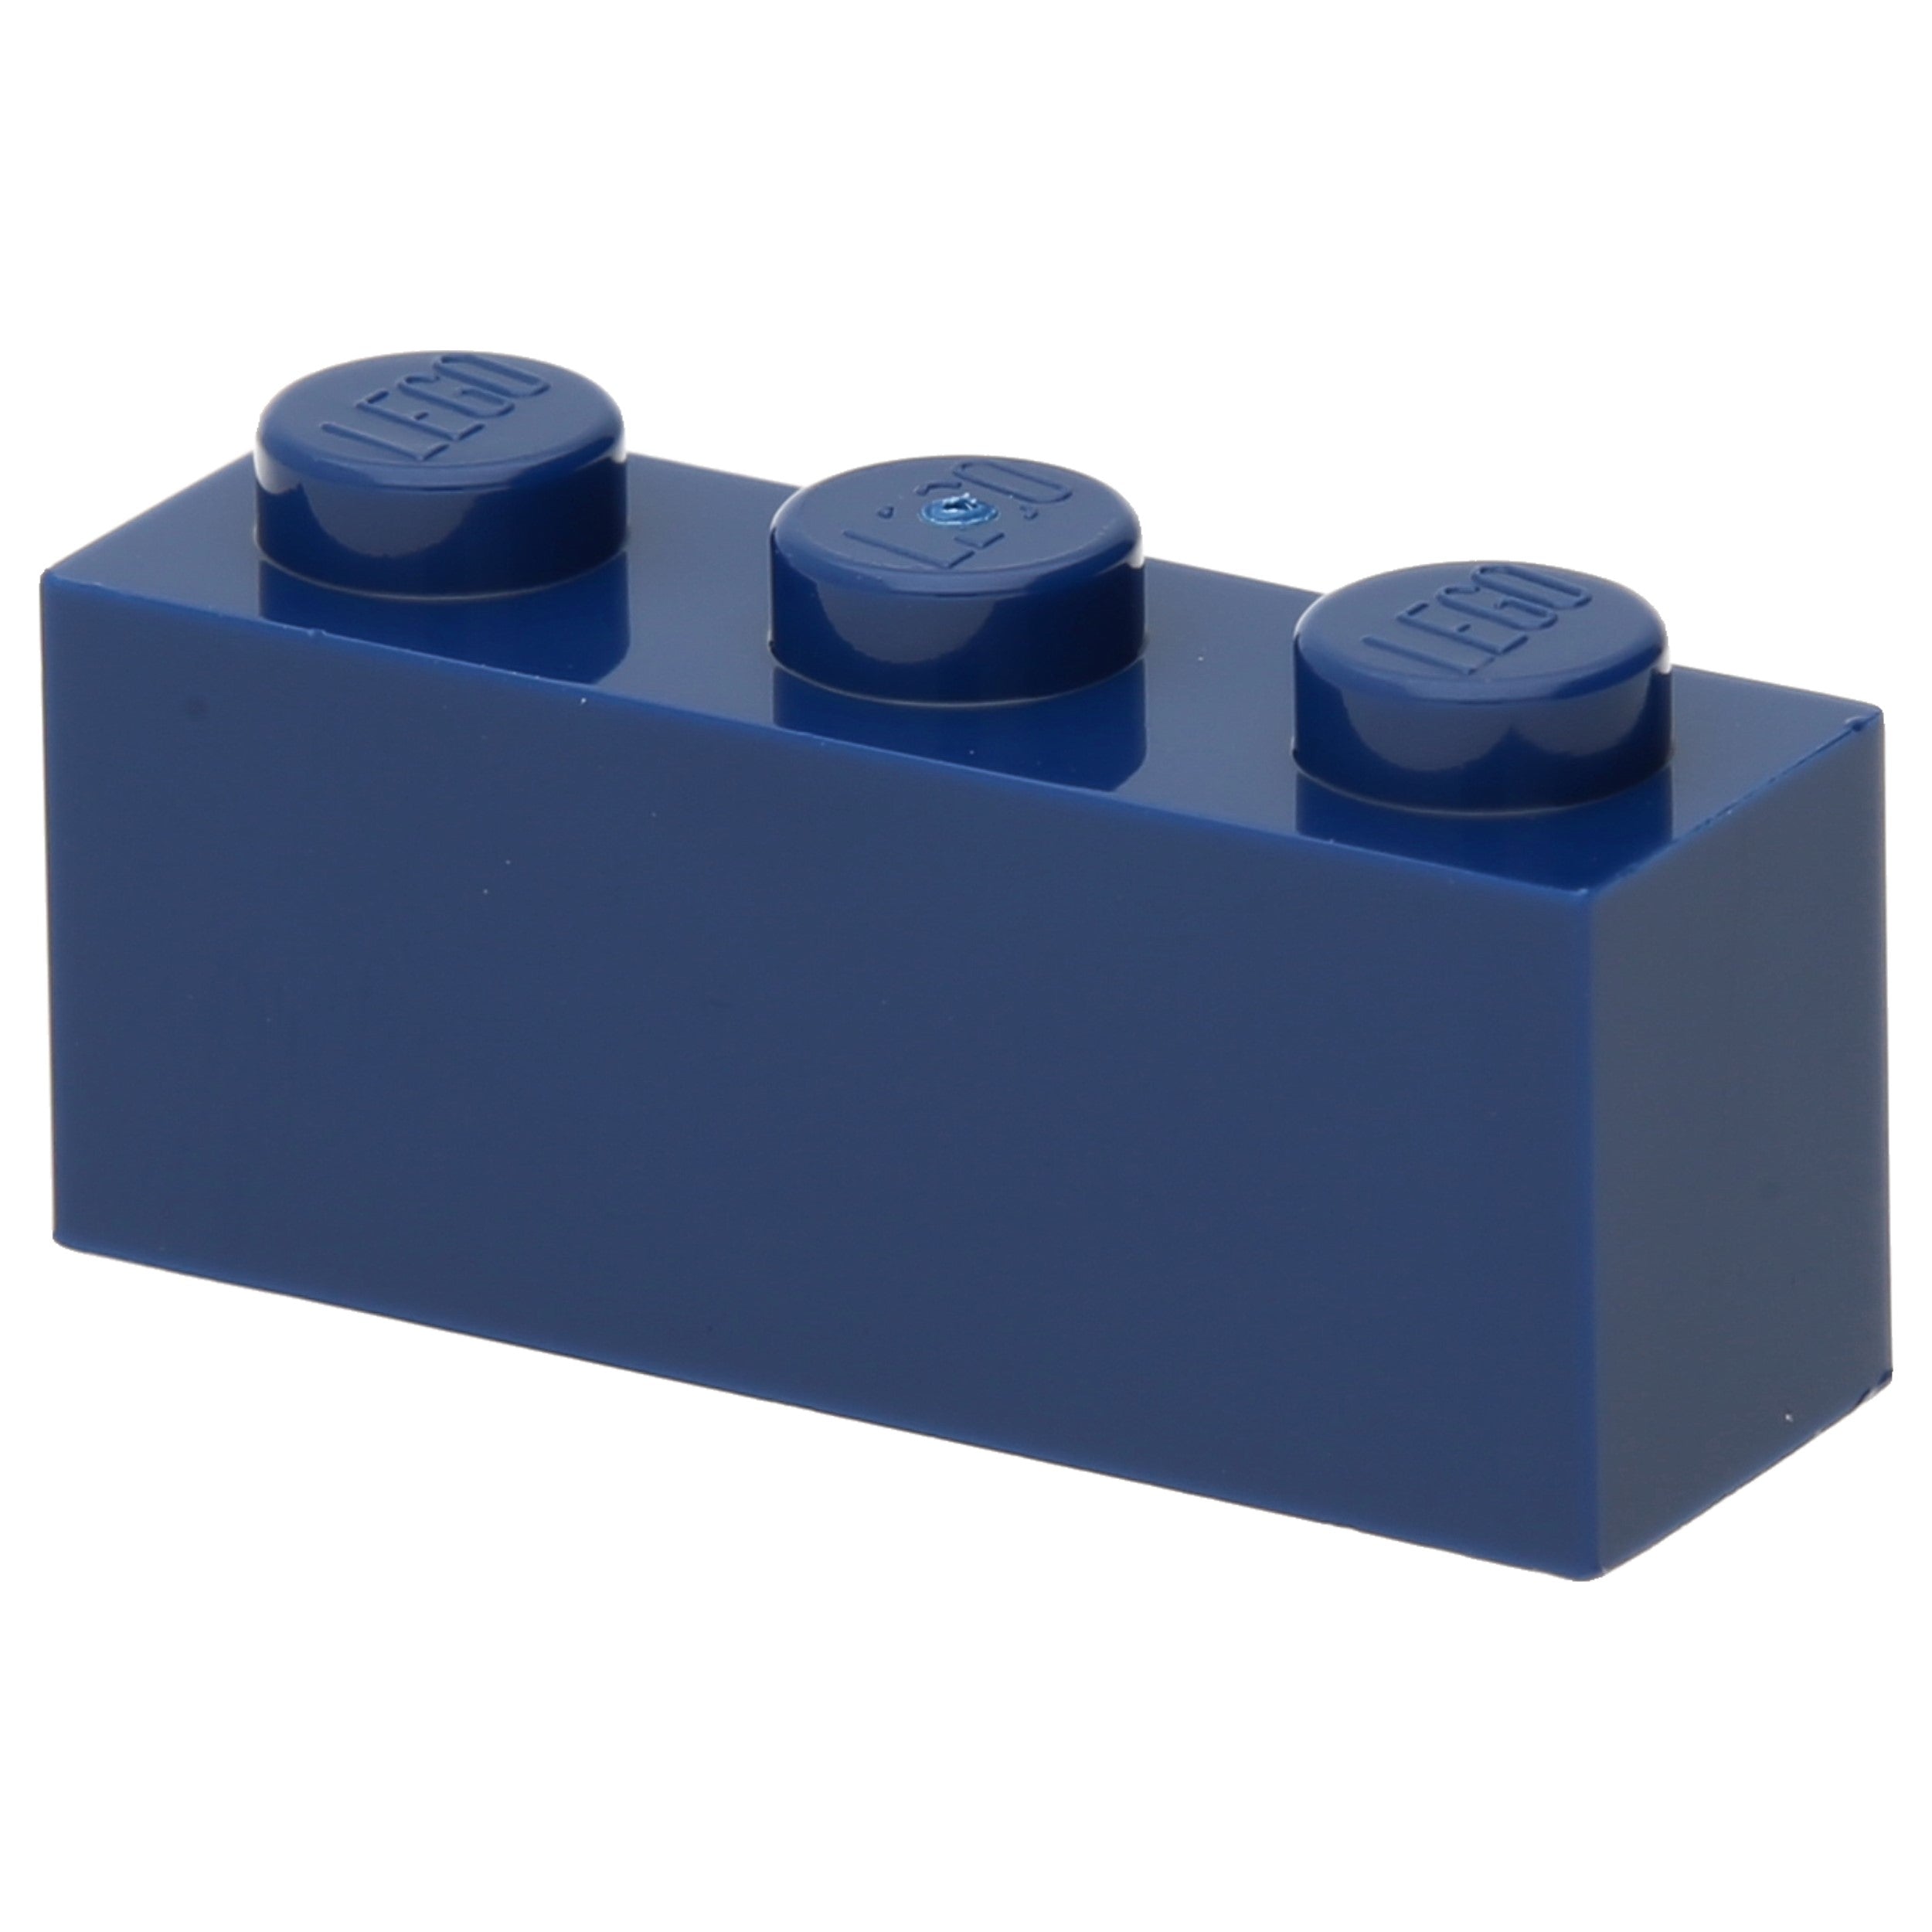 LEGO stones (standard) - 1 x 3